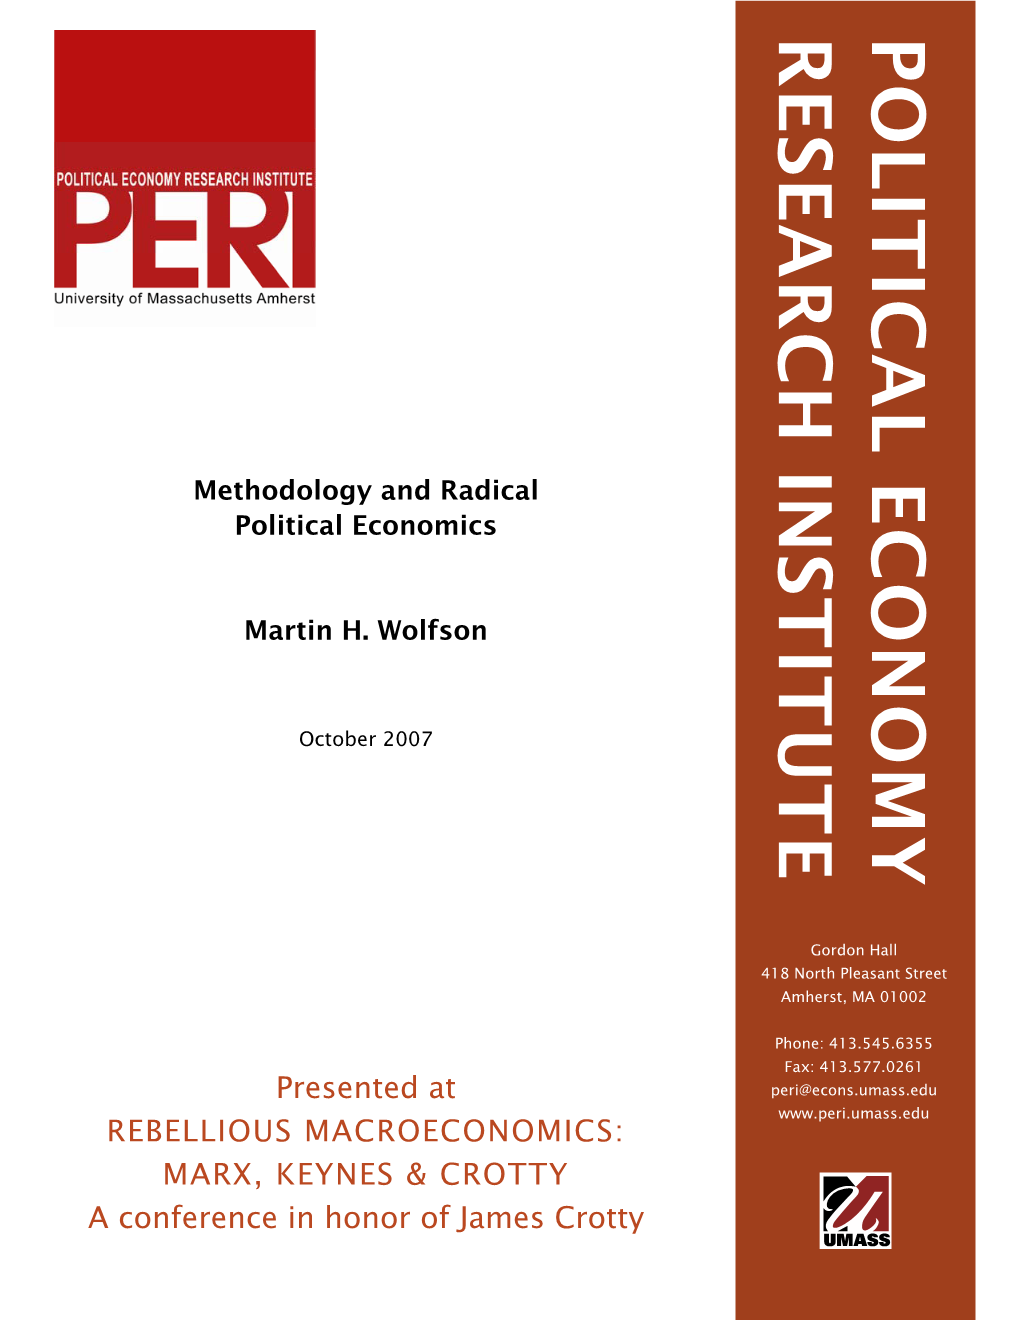 Methodology and Radical Political Economics